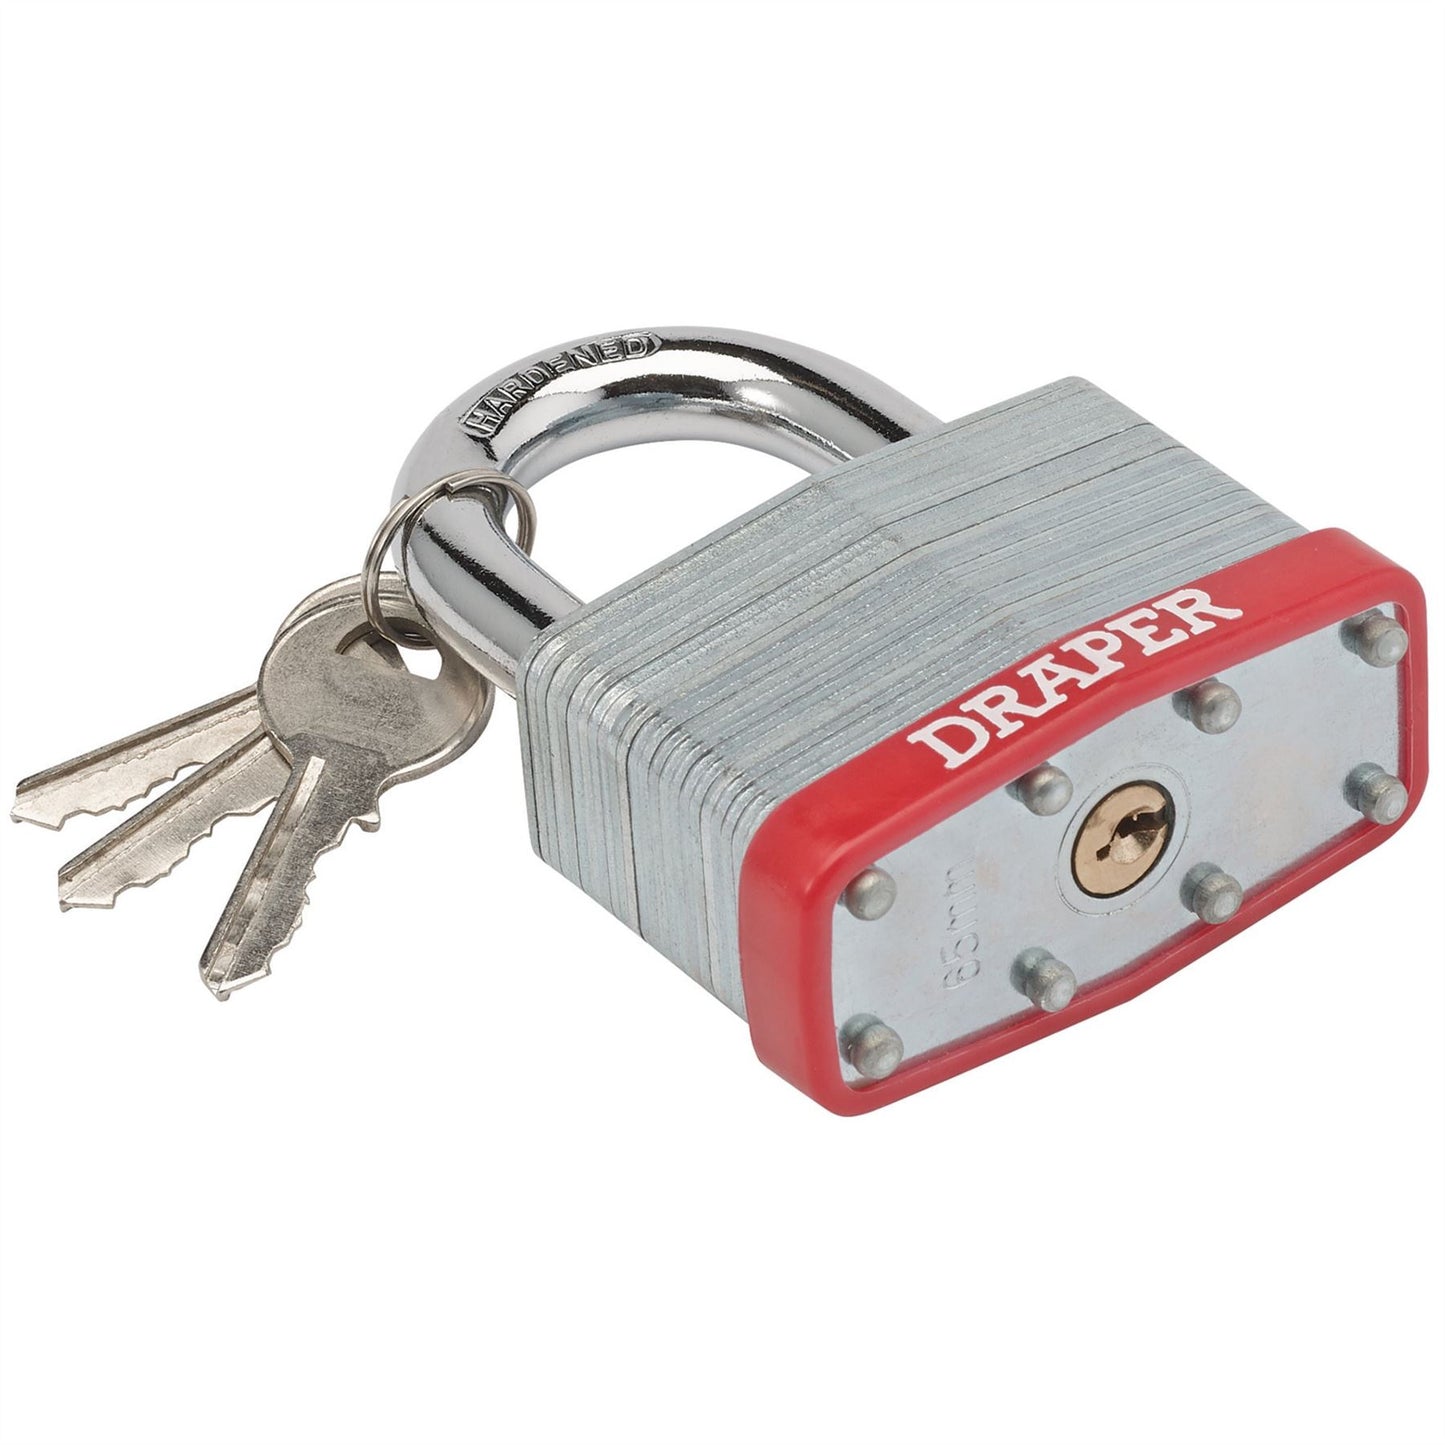 Draper 65mm Laminated Steel Padlock With 3 Keys. Gate, Shed, Cupboard Padlock - 68807